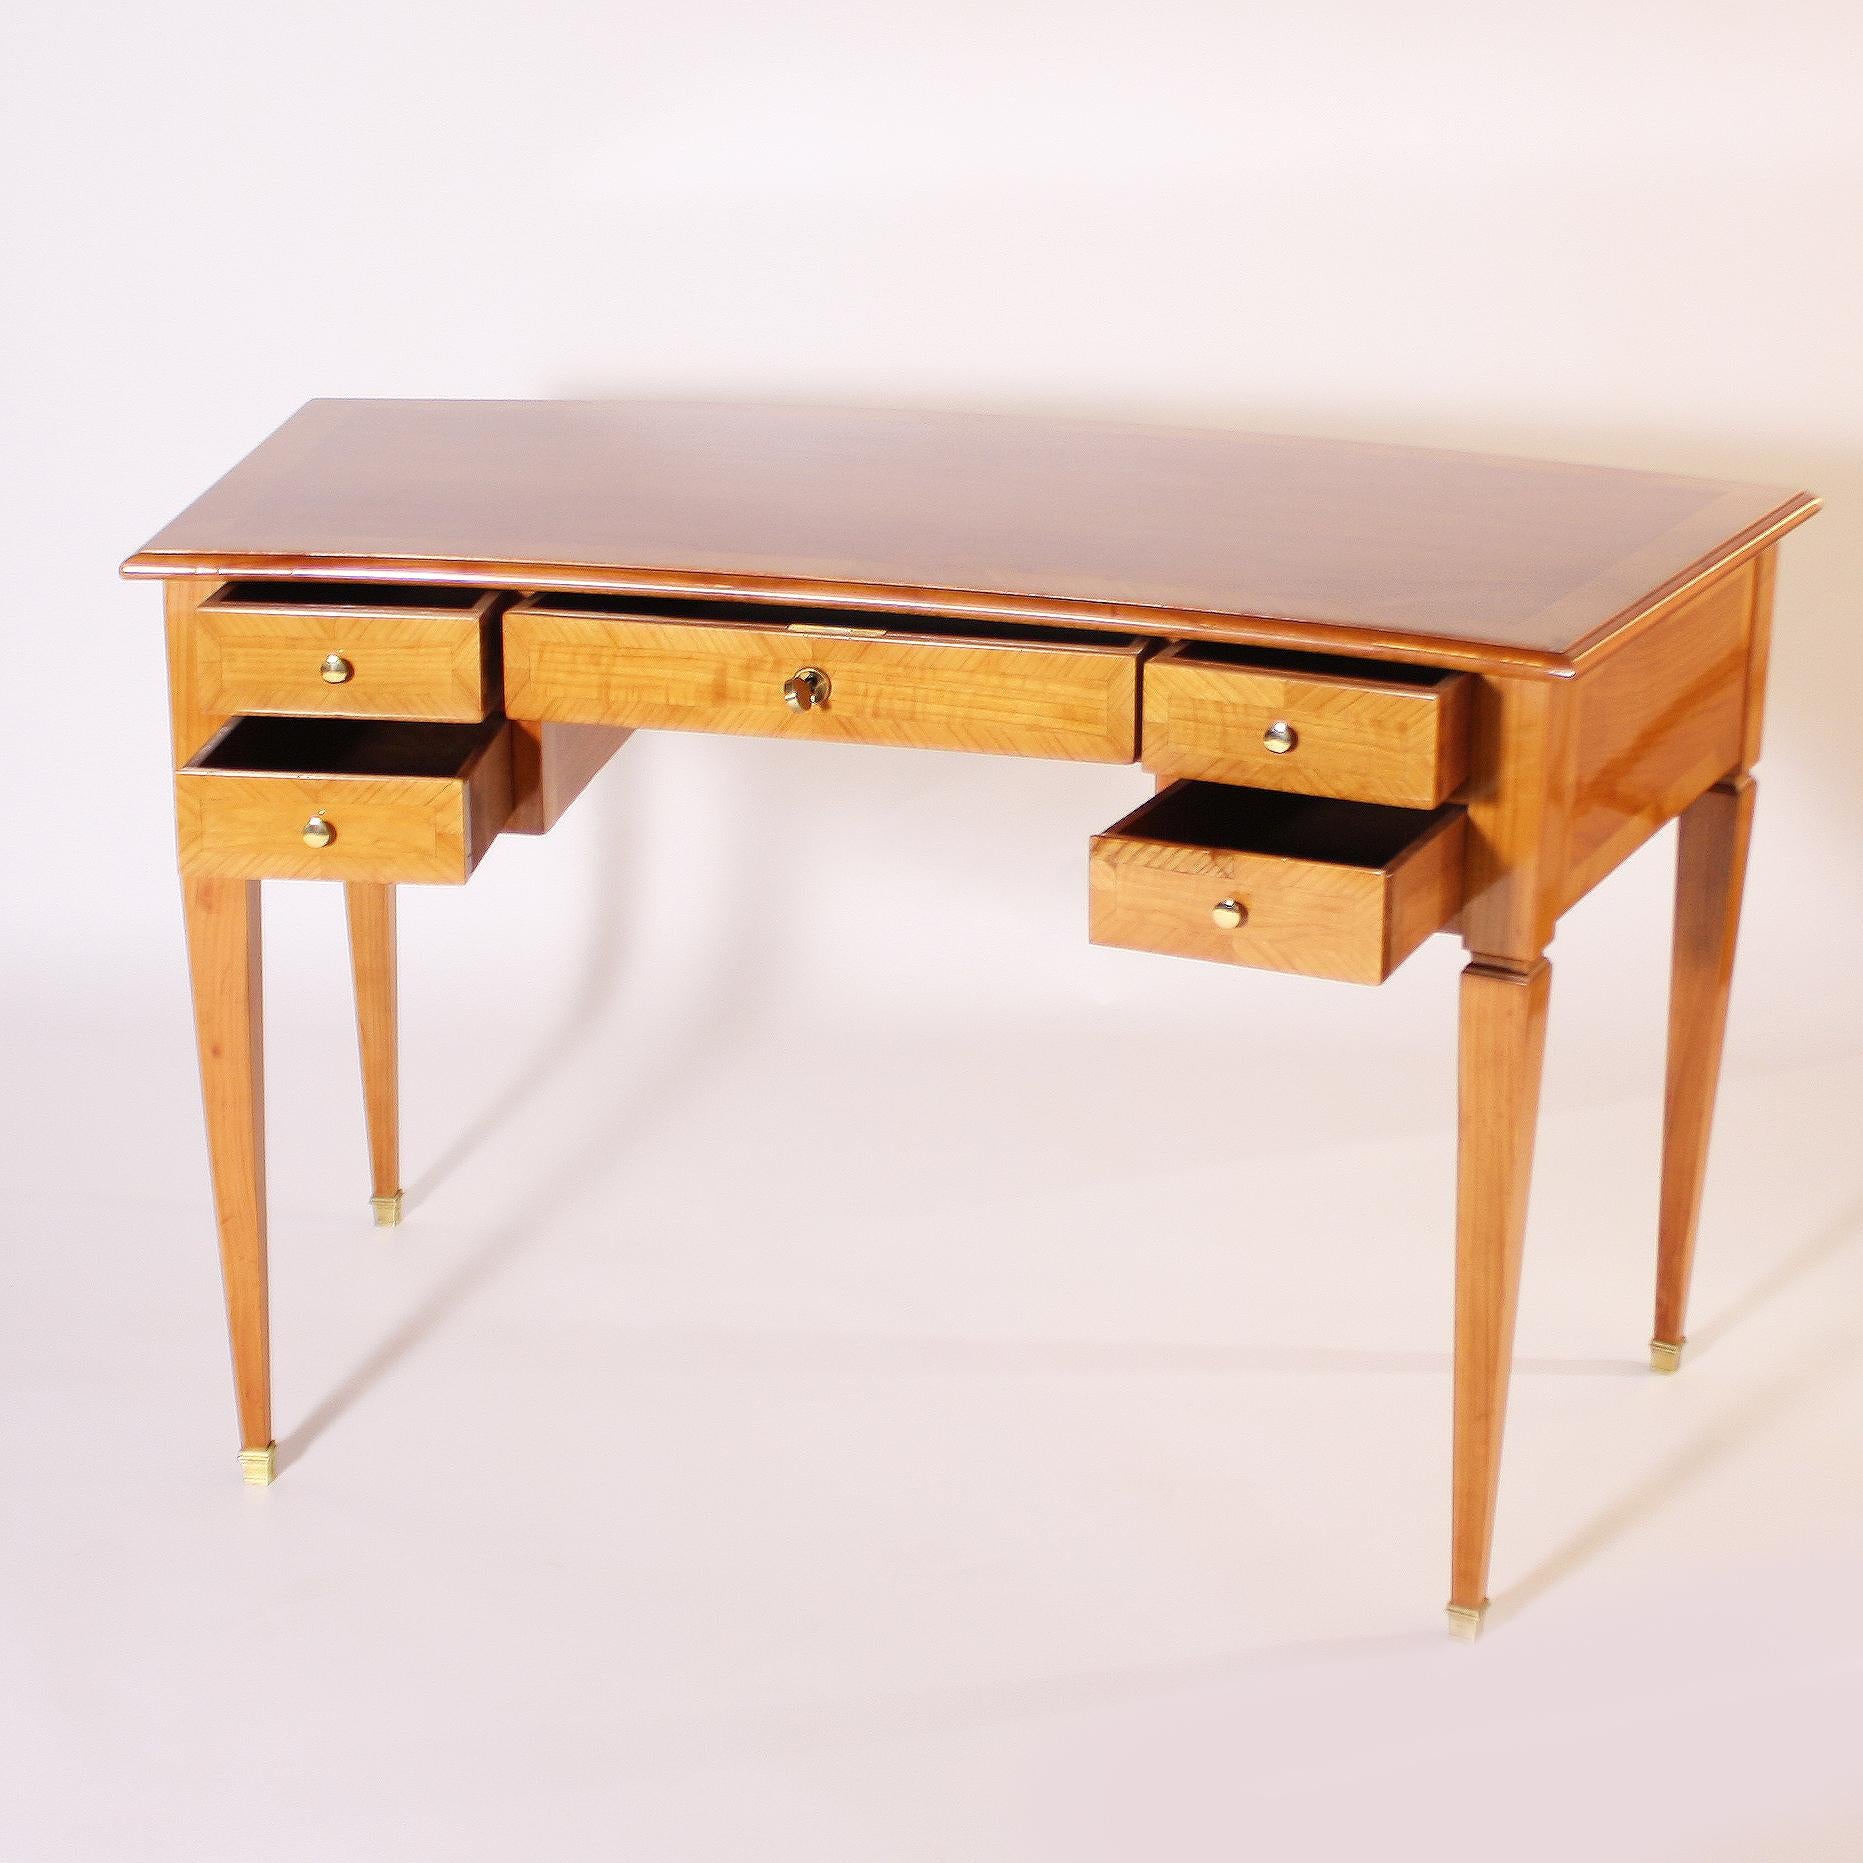 French merisier curved desk, circa 1950.
$6500.